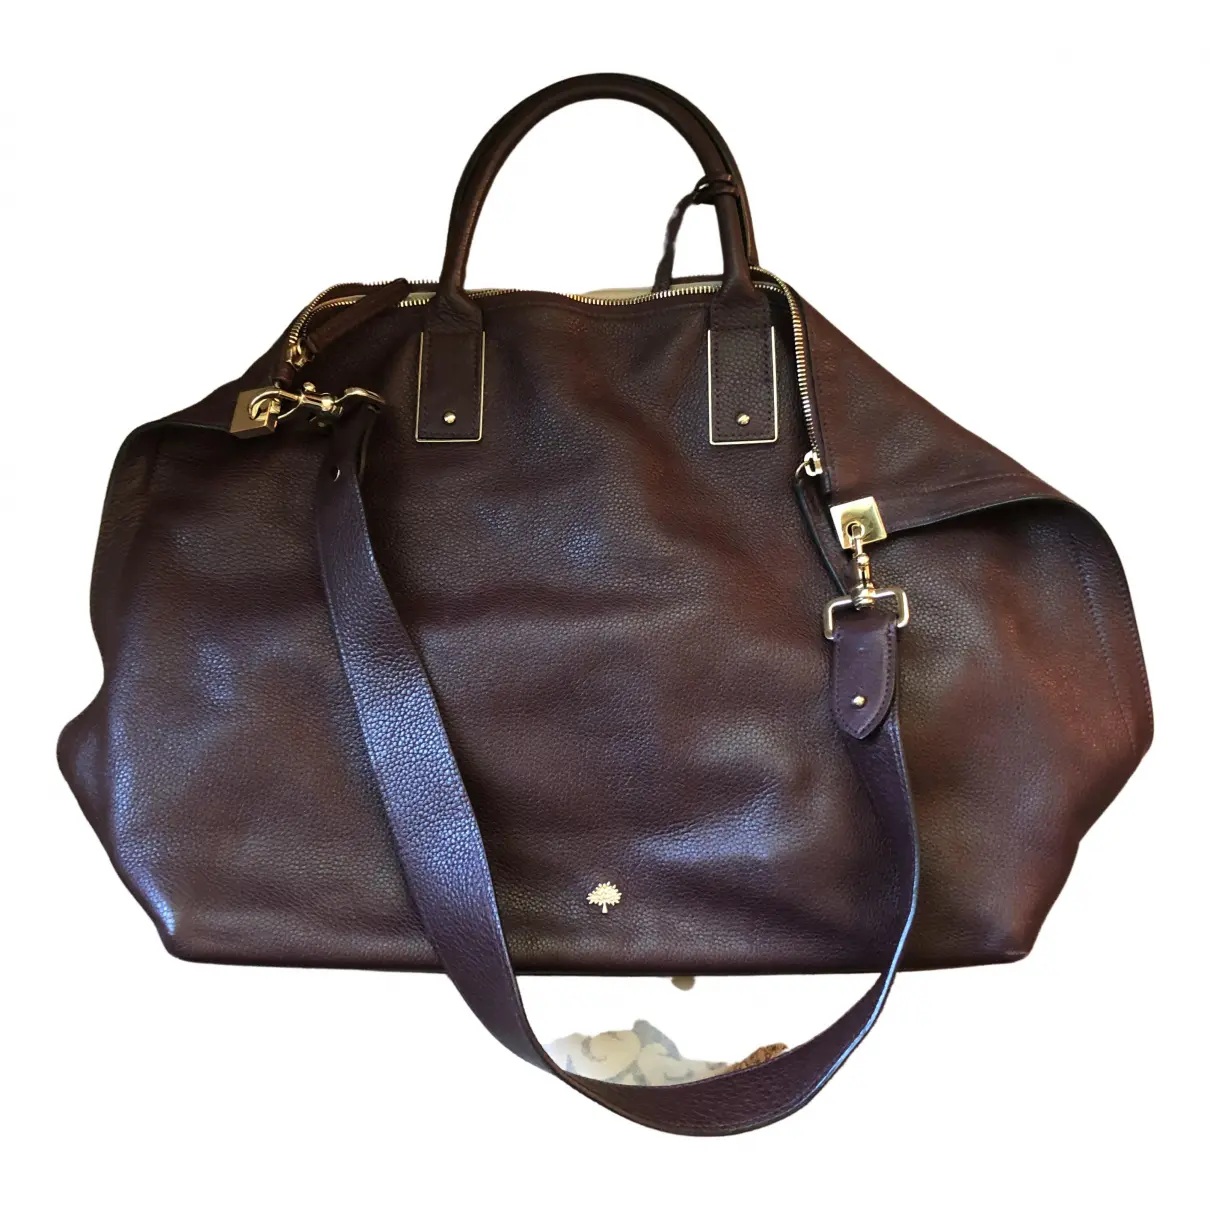 Alice leather handbag Mulberry